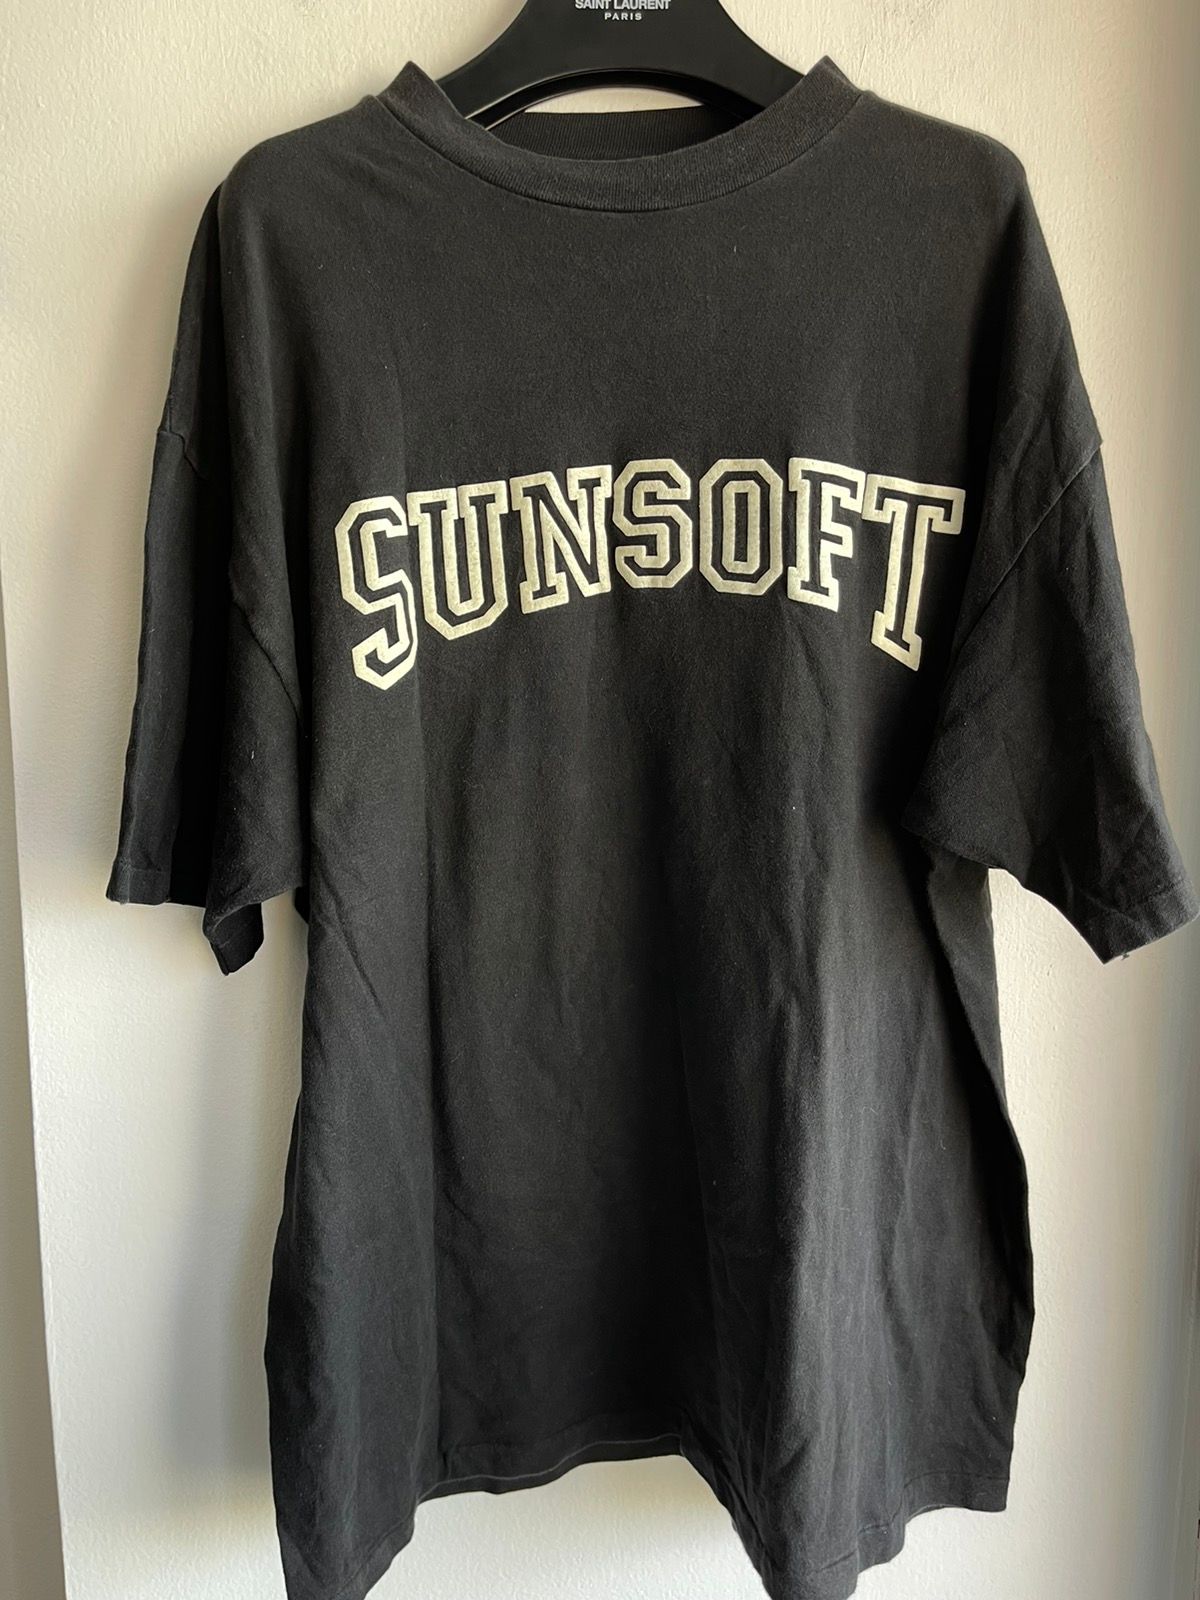 Vintage 90s SUNSOFT Black XL Shirt Cool Rare